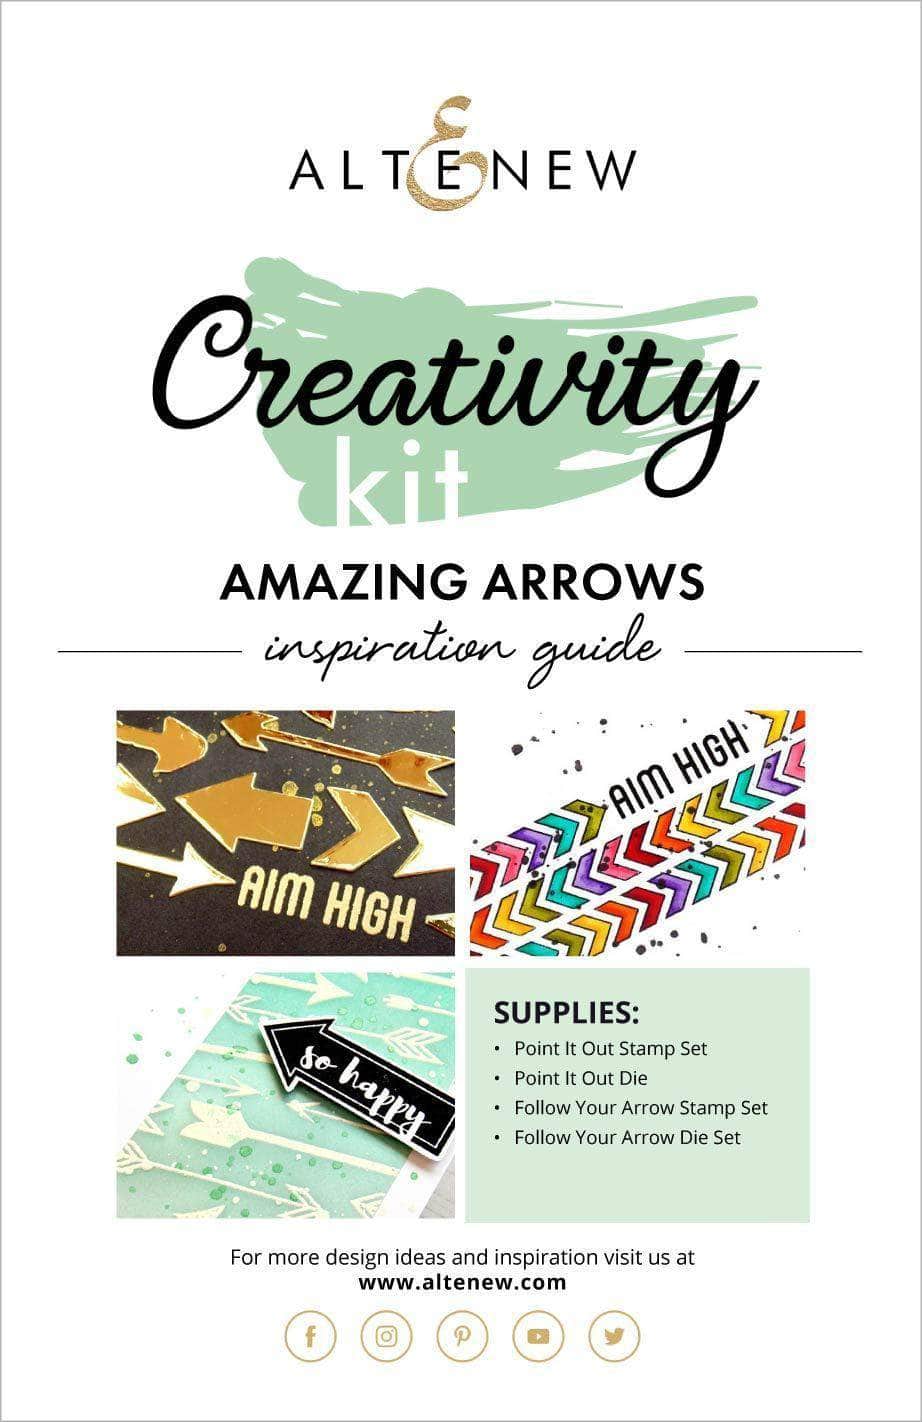 Printed Media Amazing Arrows Creativity Kit Inspiration Guide